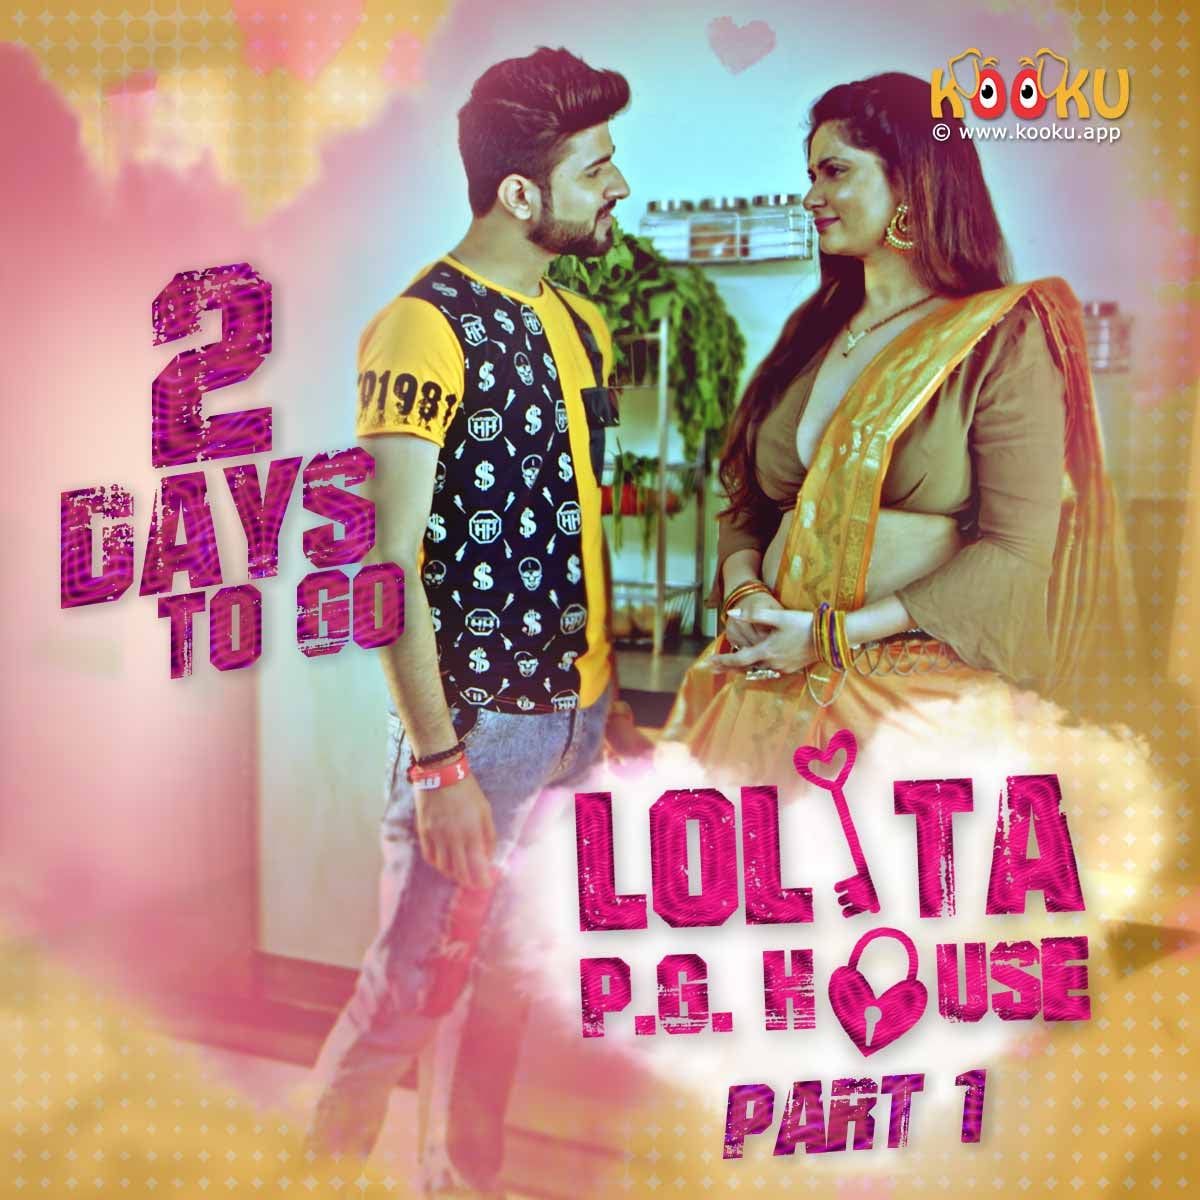 18+ Lolita PG House Part 1 2021 S01 Hindi Complete Kooku App Original Web Series 1080p HDRip 600MB Download